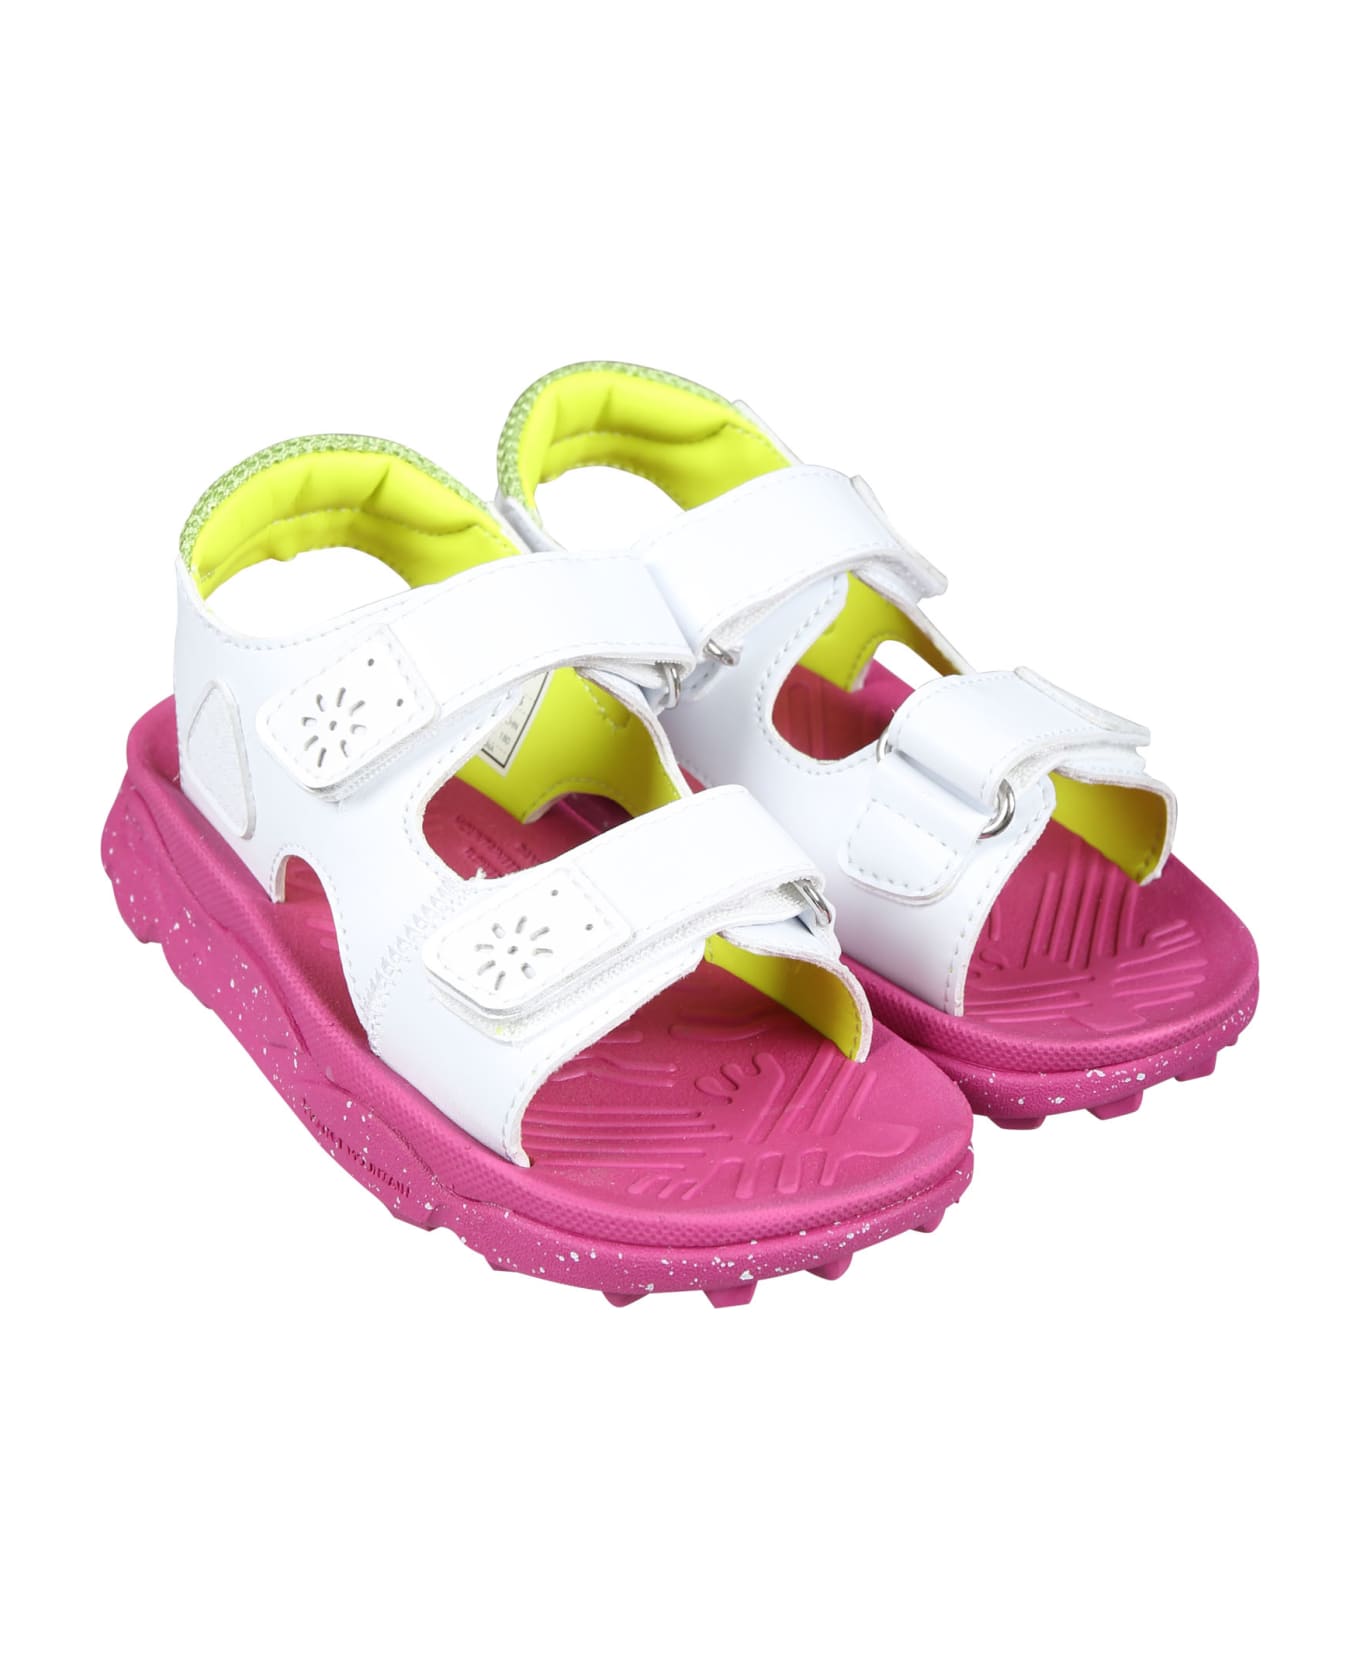 Flower Mountain White Gaho Sandals For Girl With Logo - White シューズ